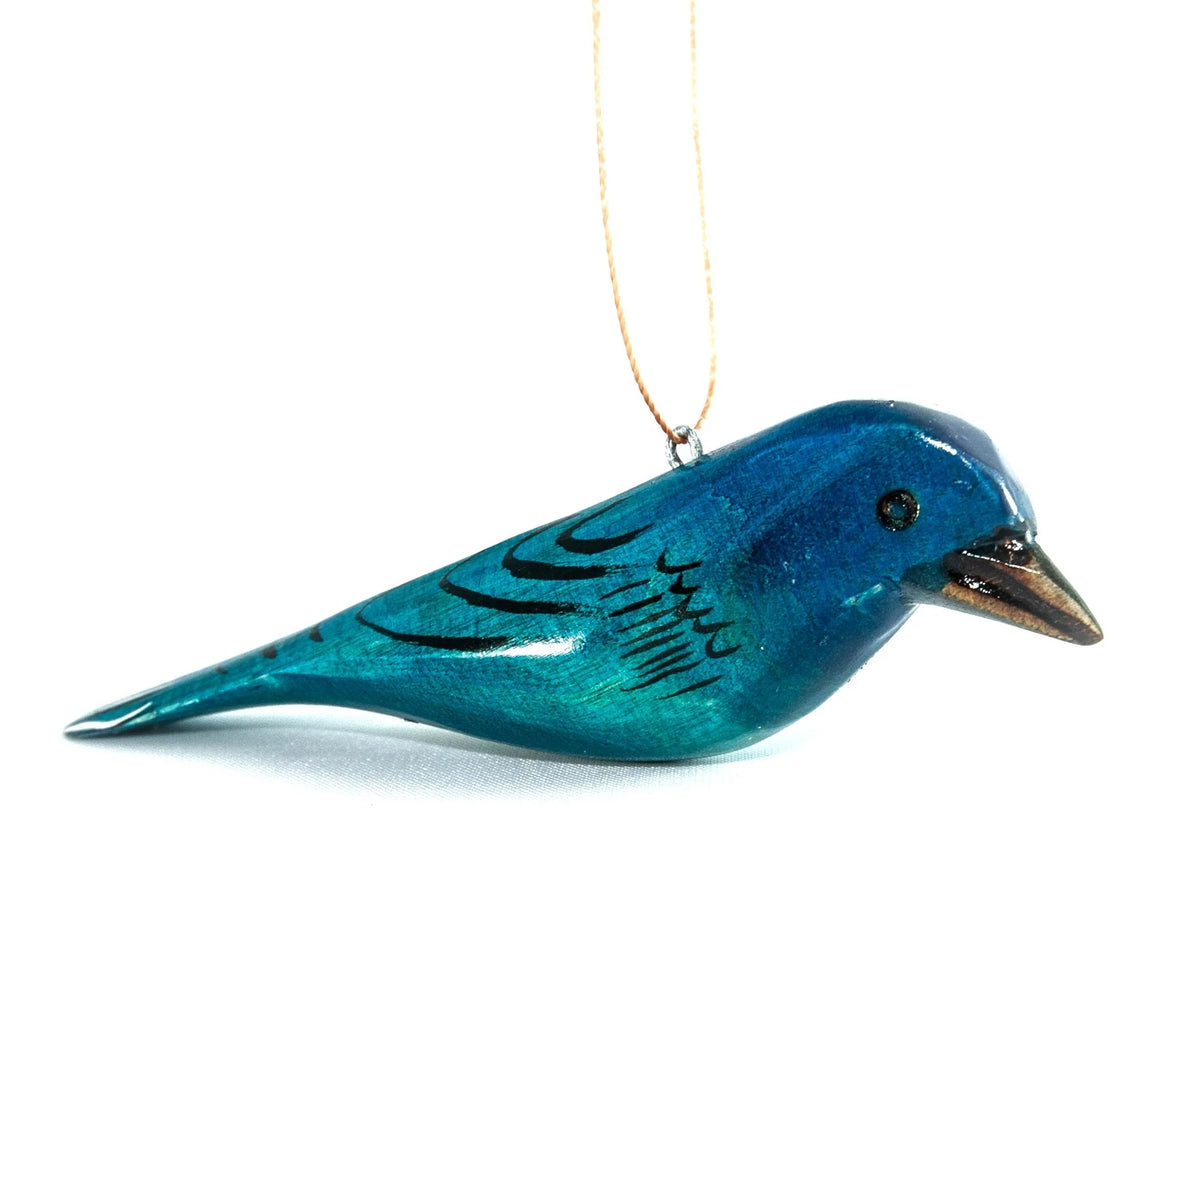 Wooden Bird Ornament: Indigo Bunting